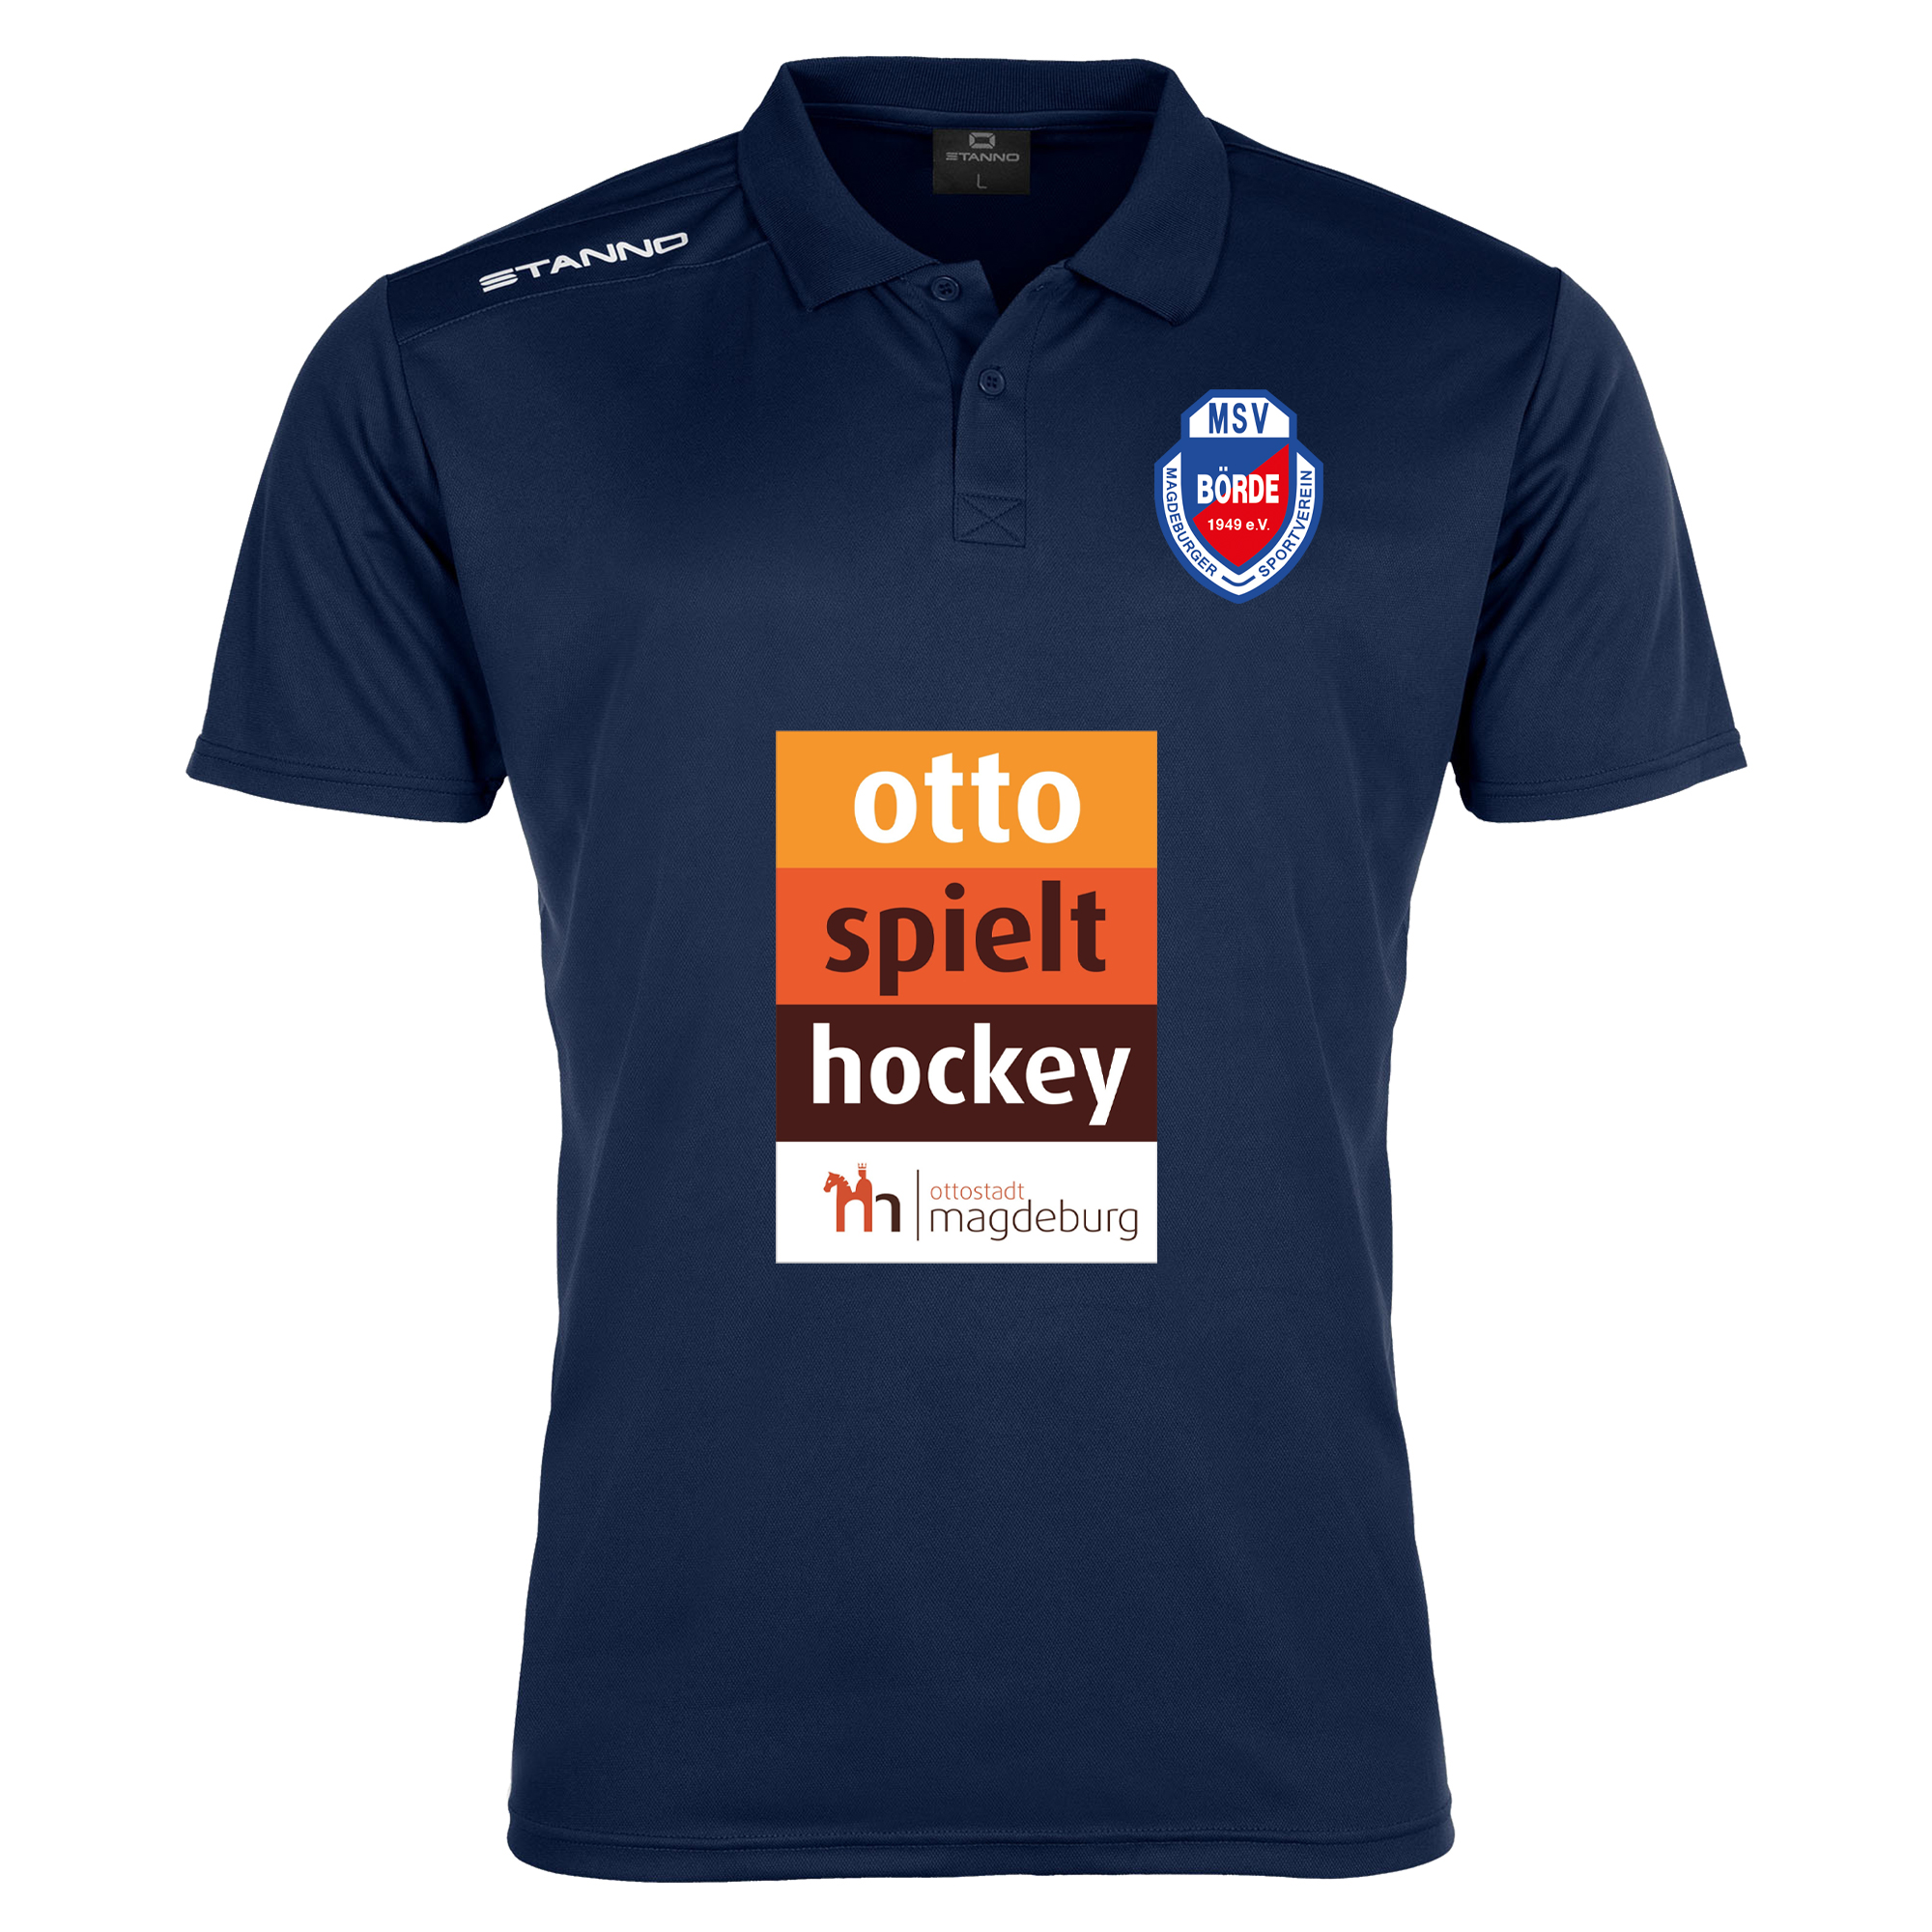 Magdeburger SV Börde Poloshirt Sponsor